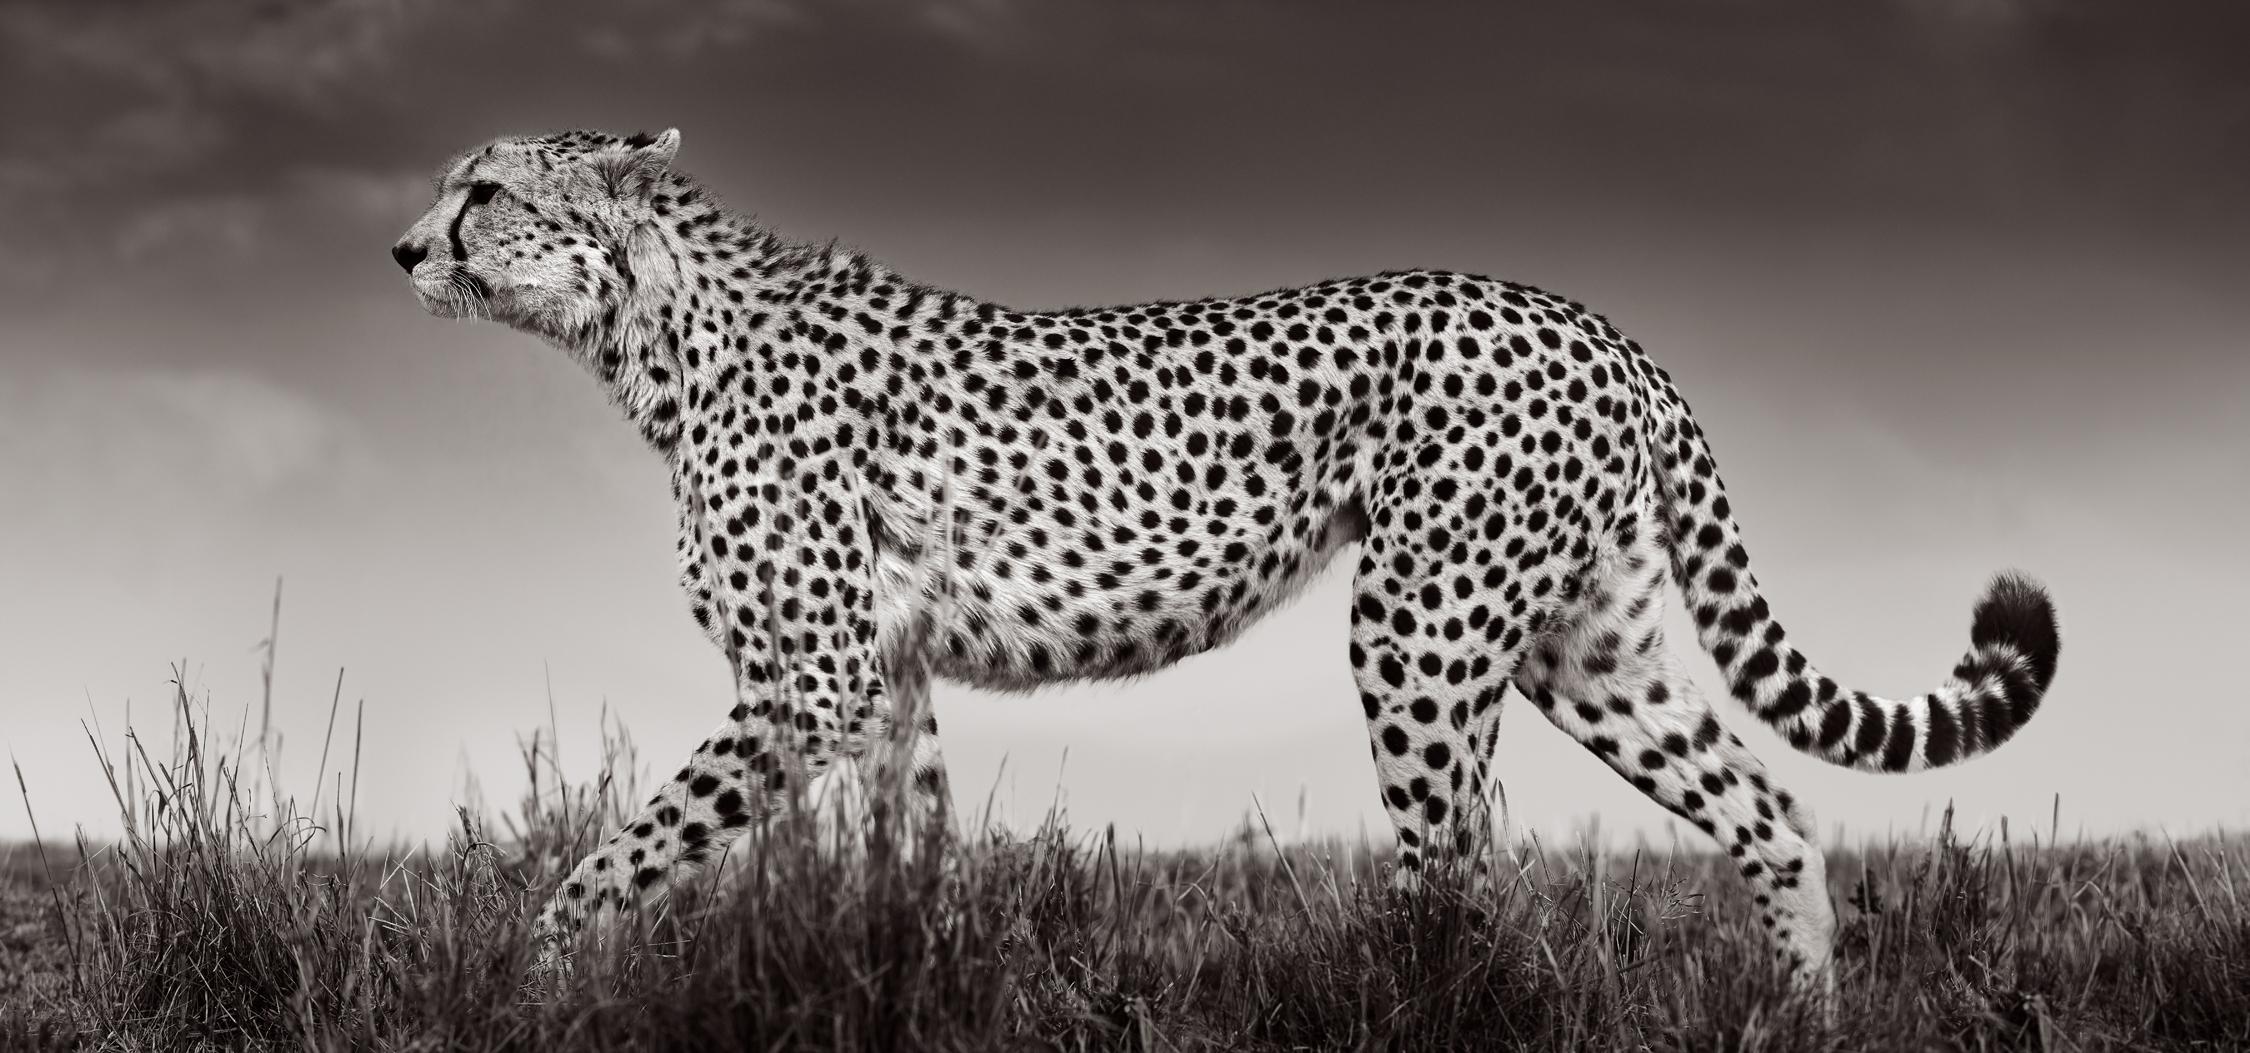 Drew Doggett Black and White Photograph - Cheetah in Profile Walking Across the Grass in Kenya, Black & White